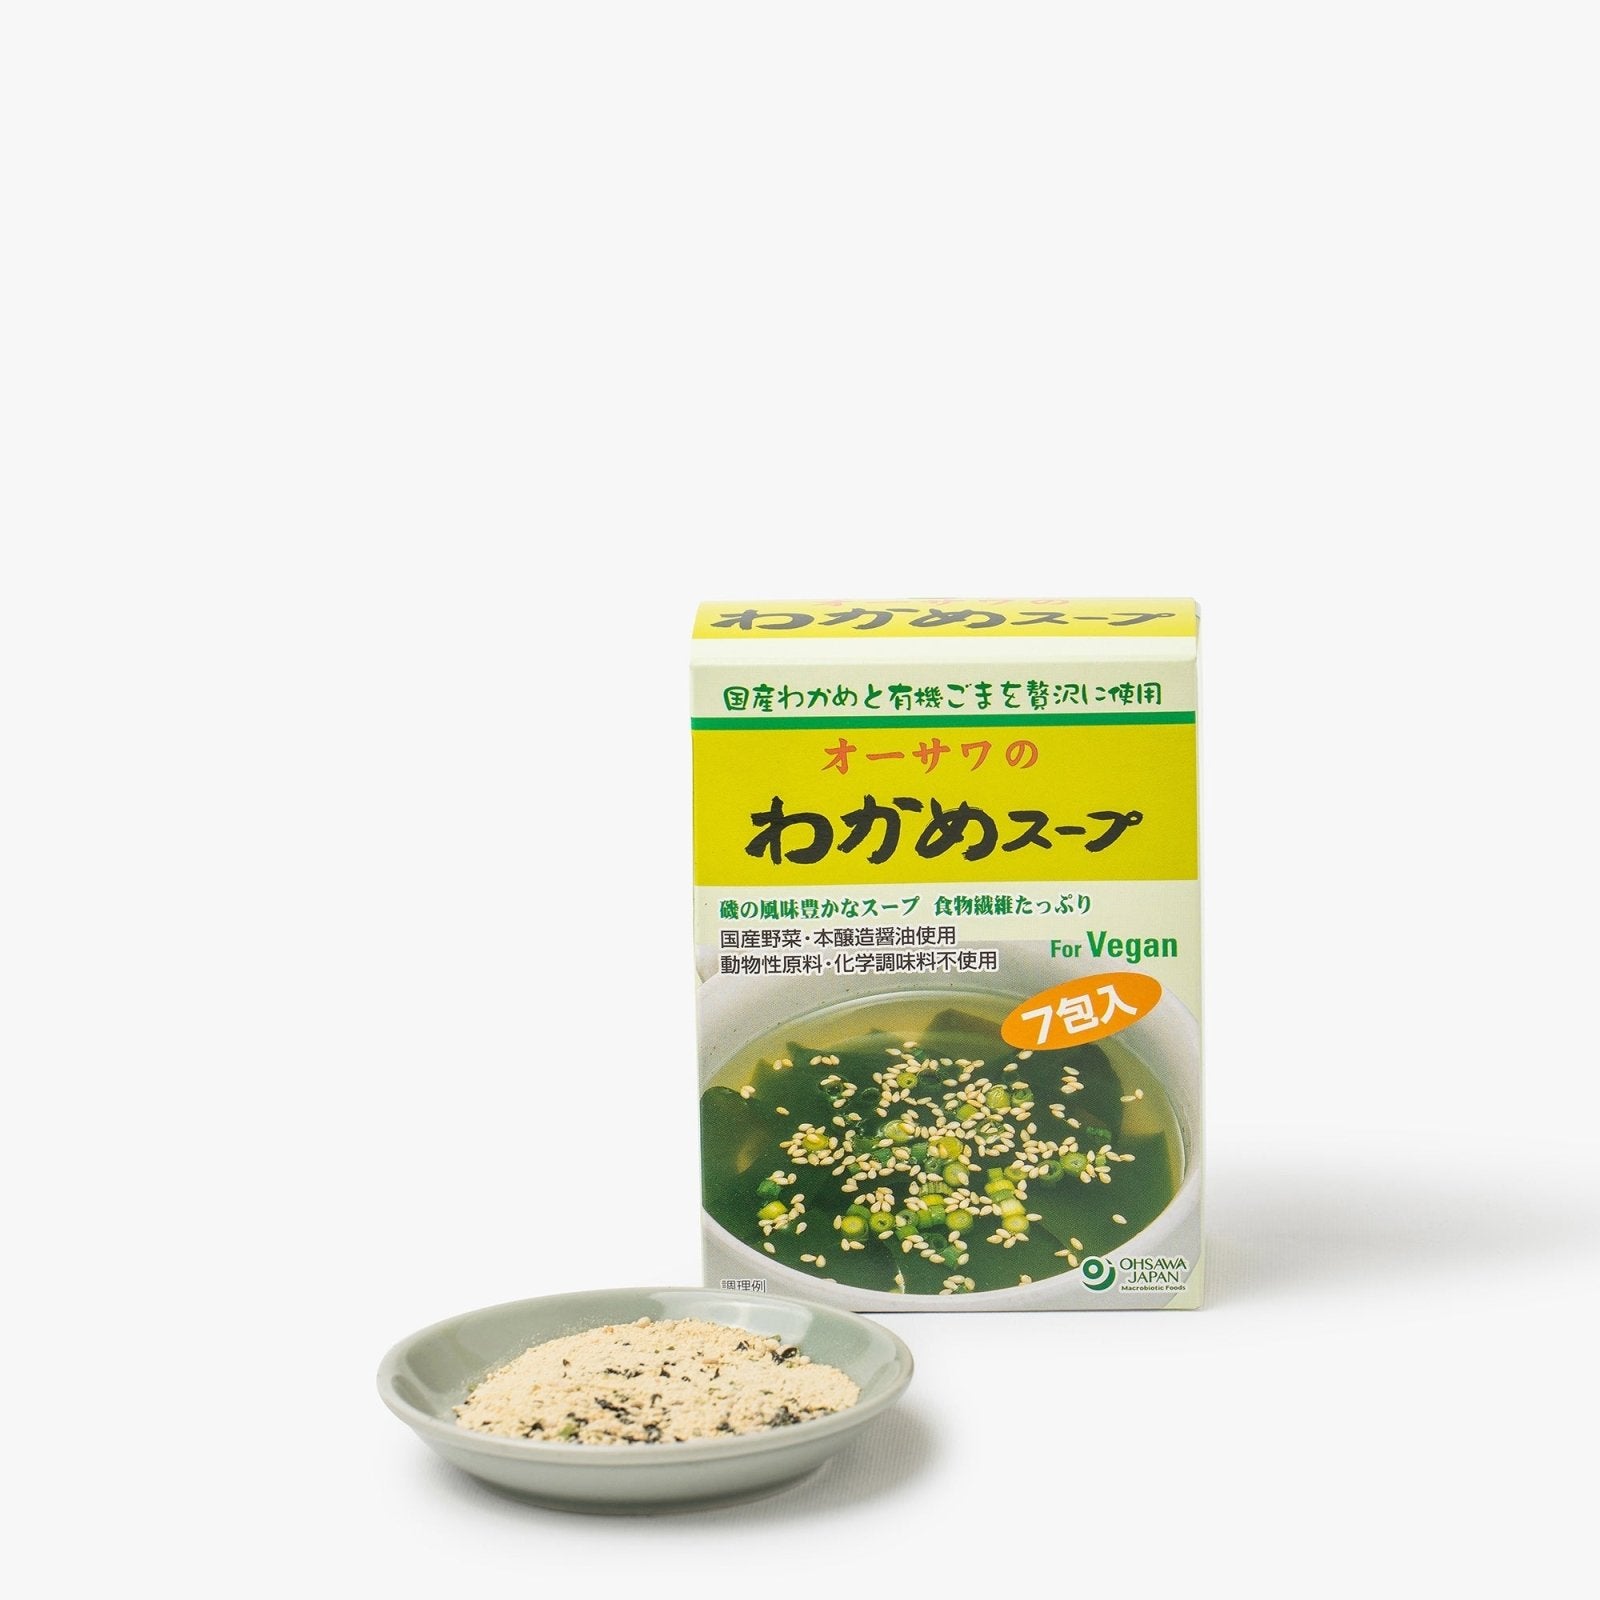 Soupe à l'algue wakamé instantanée - 45.5g - Ohsawa - iRASSHAi